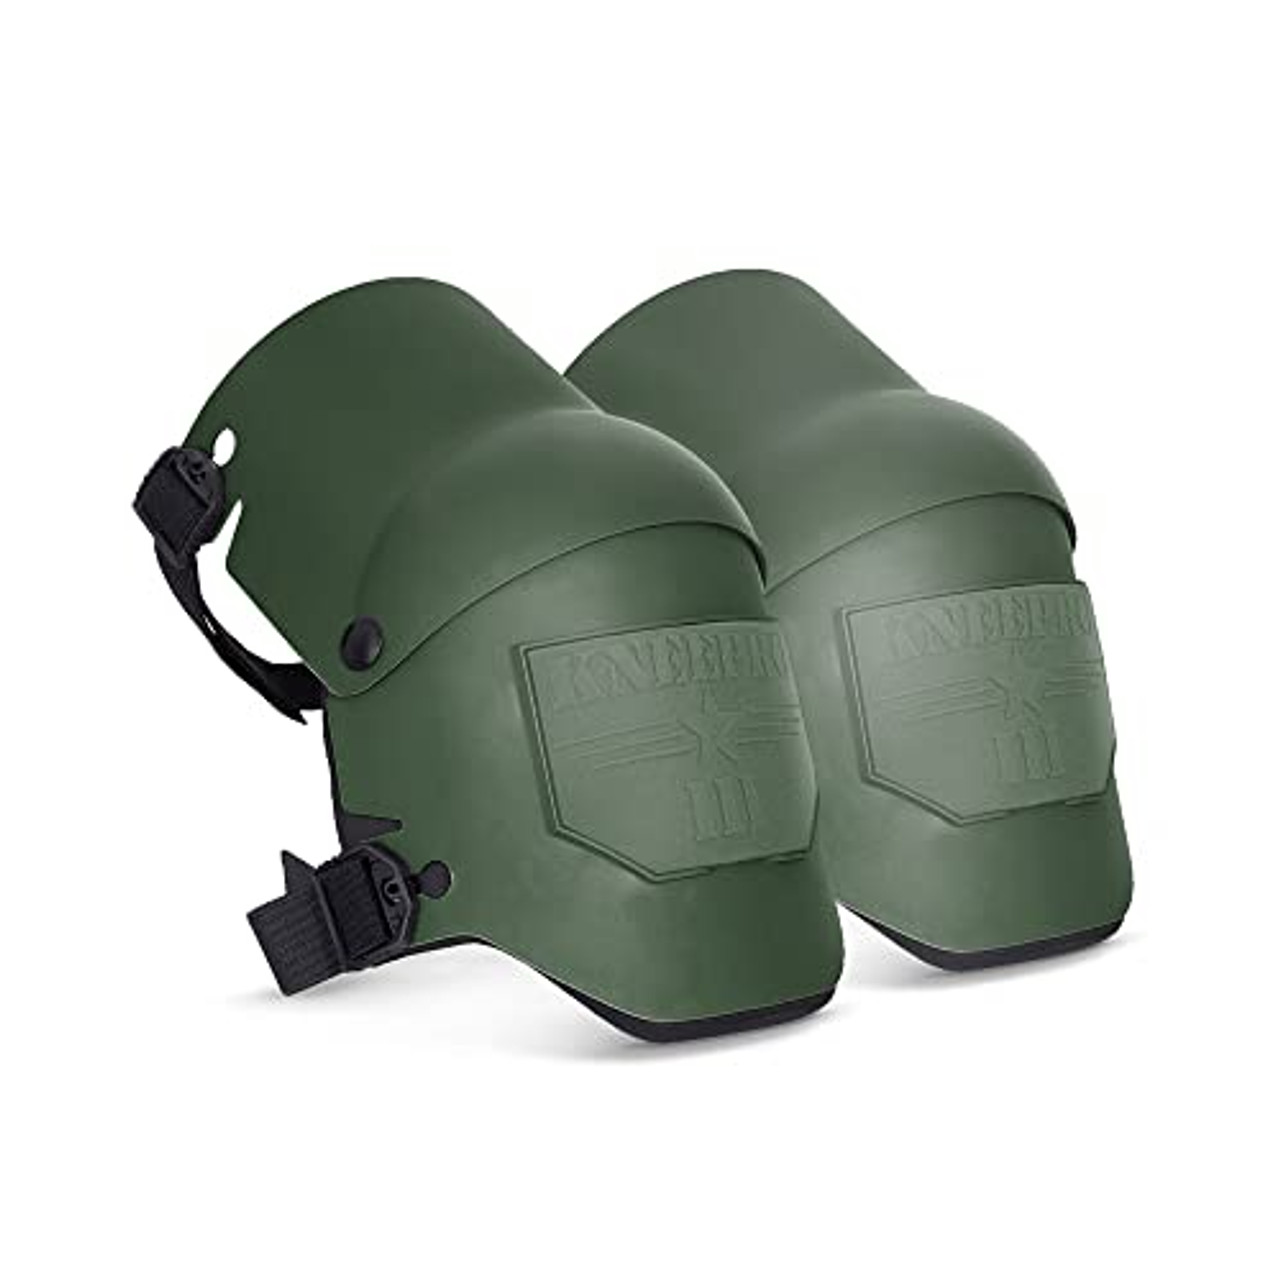 Sellstrom Knee Pro Ultra Flex III Knee Pad, Black Shell, Black Strip, One  Size